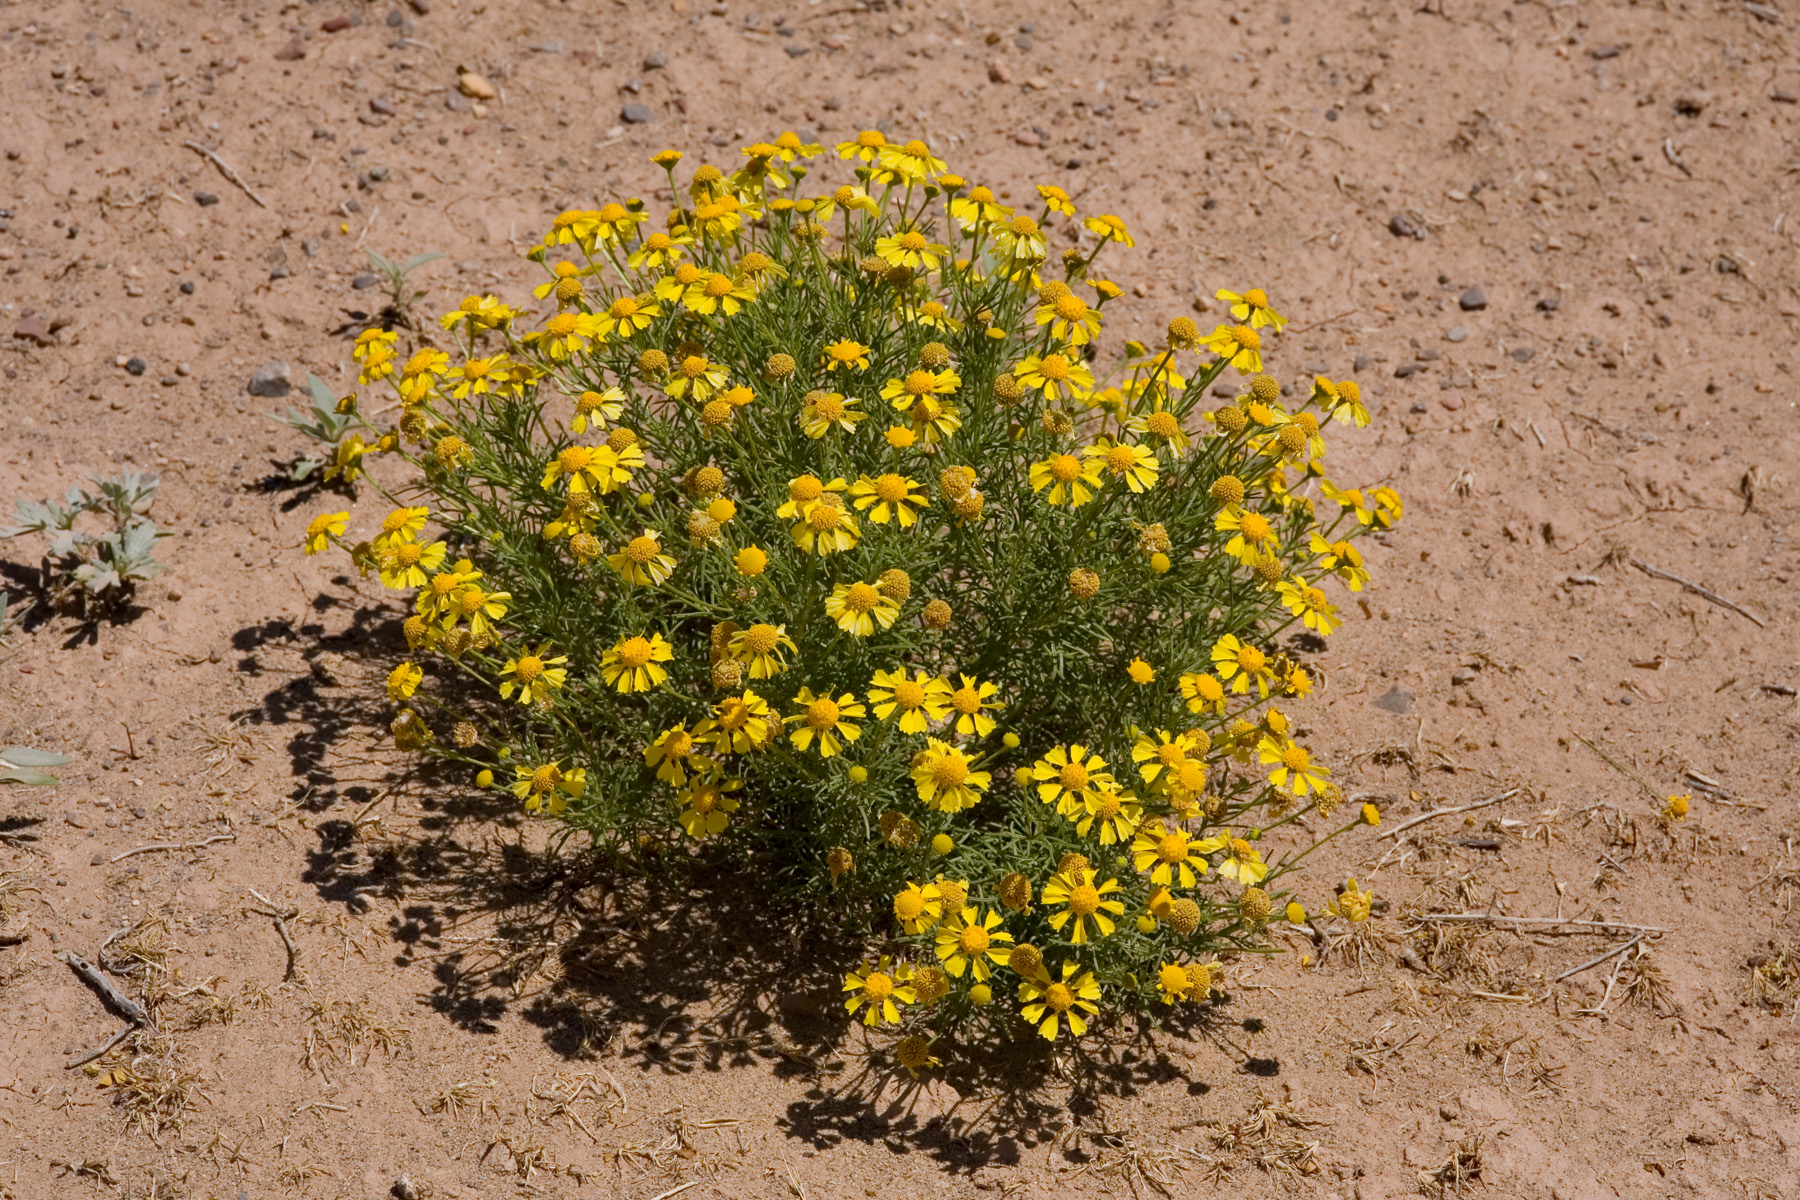 Entire specimen of Hymenoxys odorata showing small, bushy habit and yellow flowers